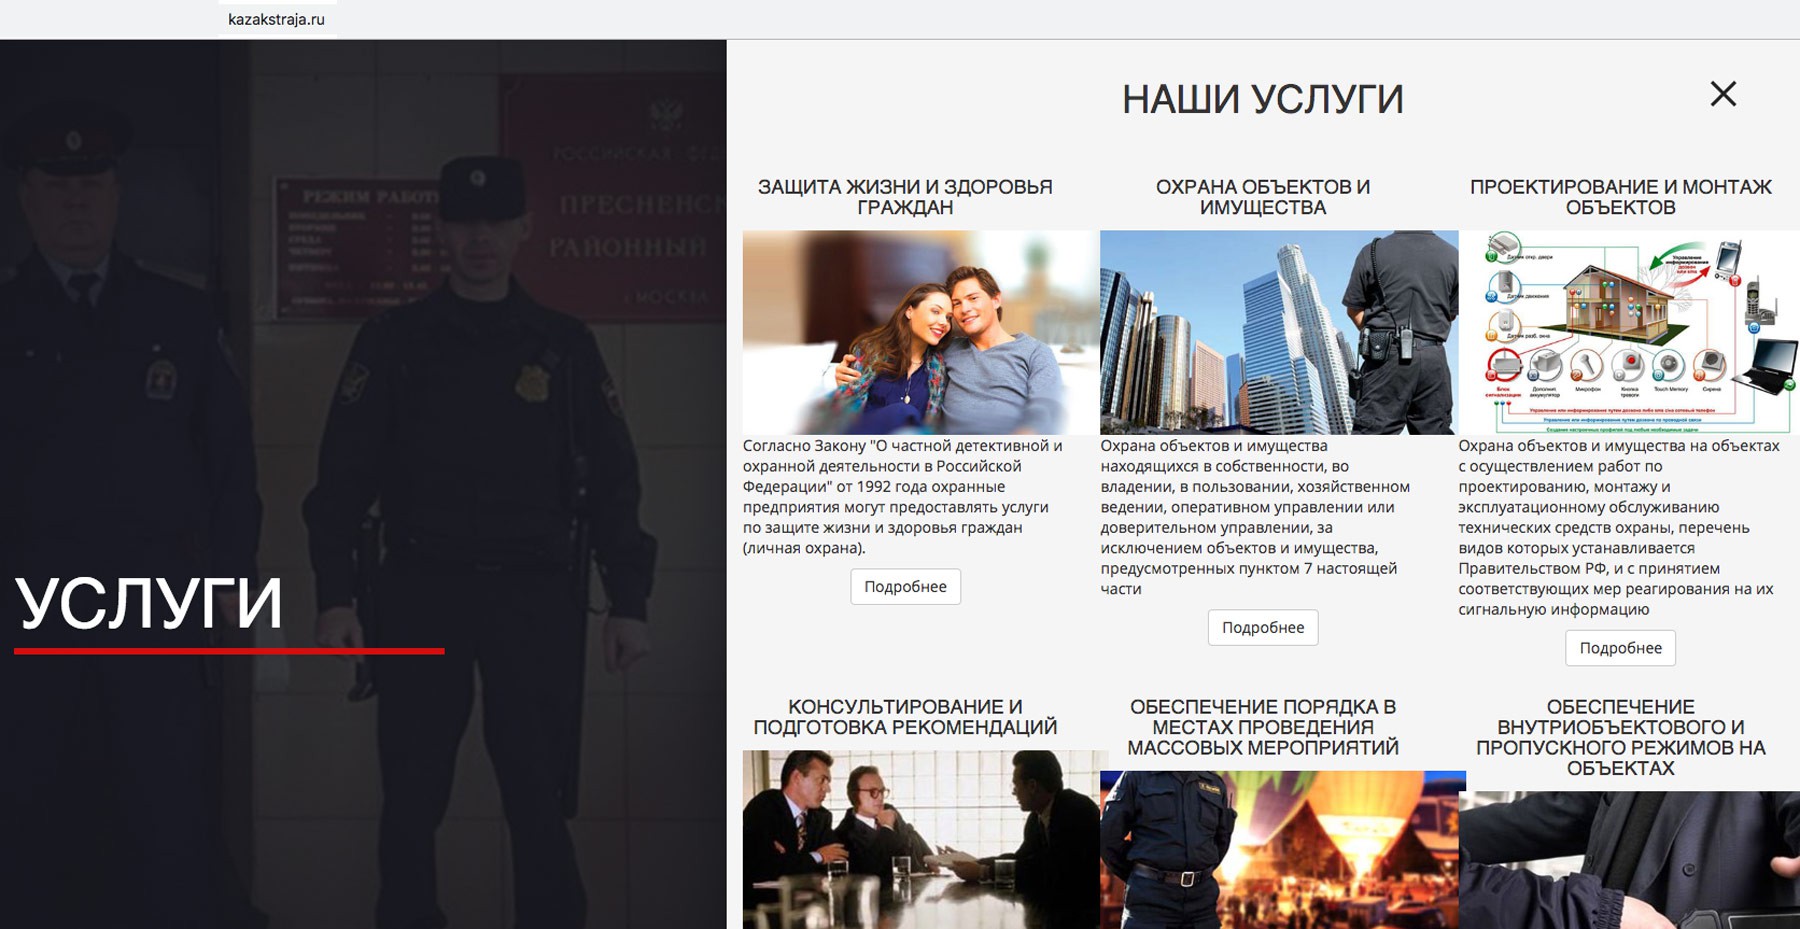 Скриншот сайта kazakstraja.ru